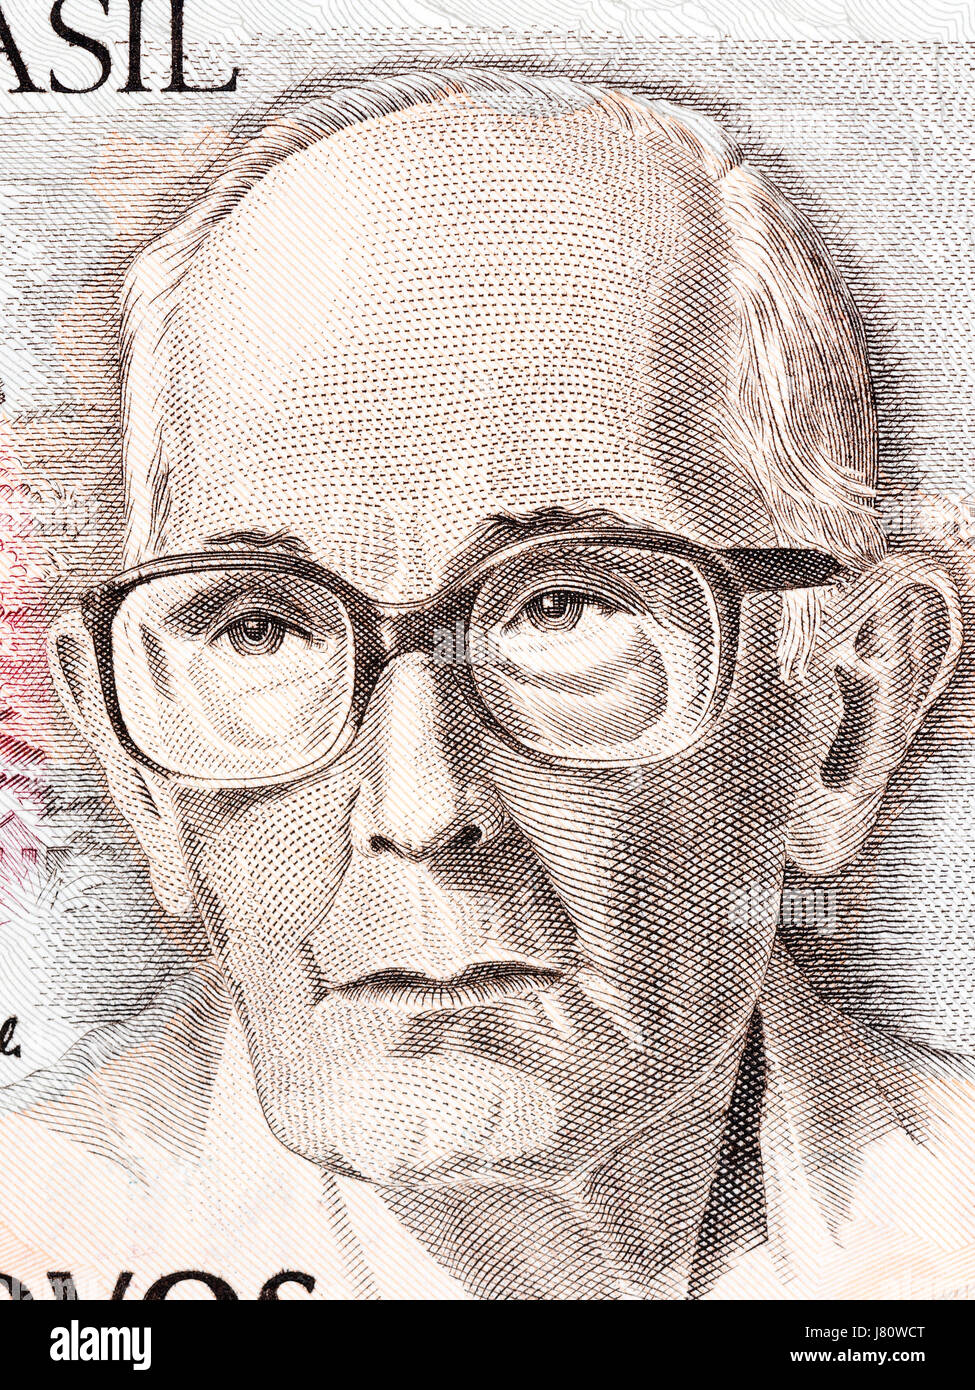 Carlos Drummond de Andrade portrait from Brazilian money Stock Photo